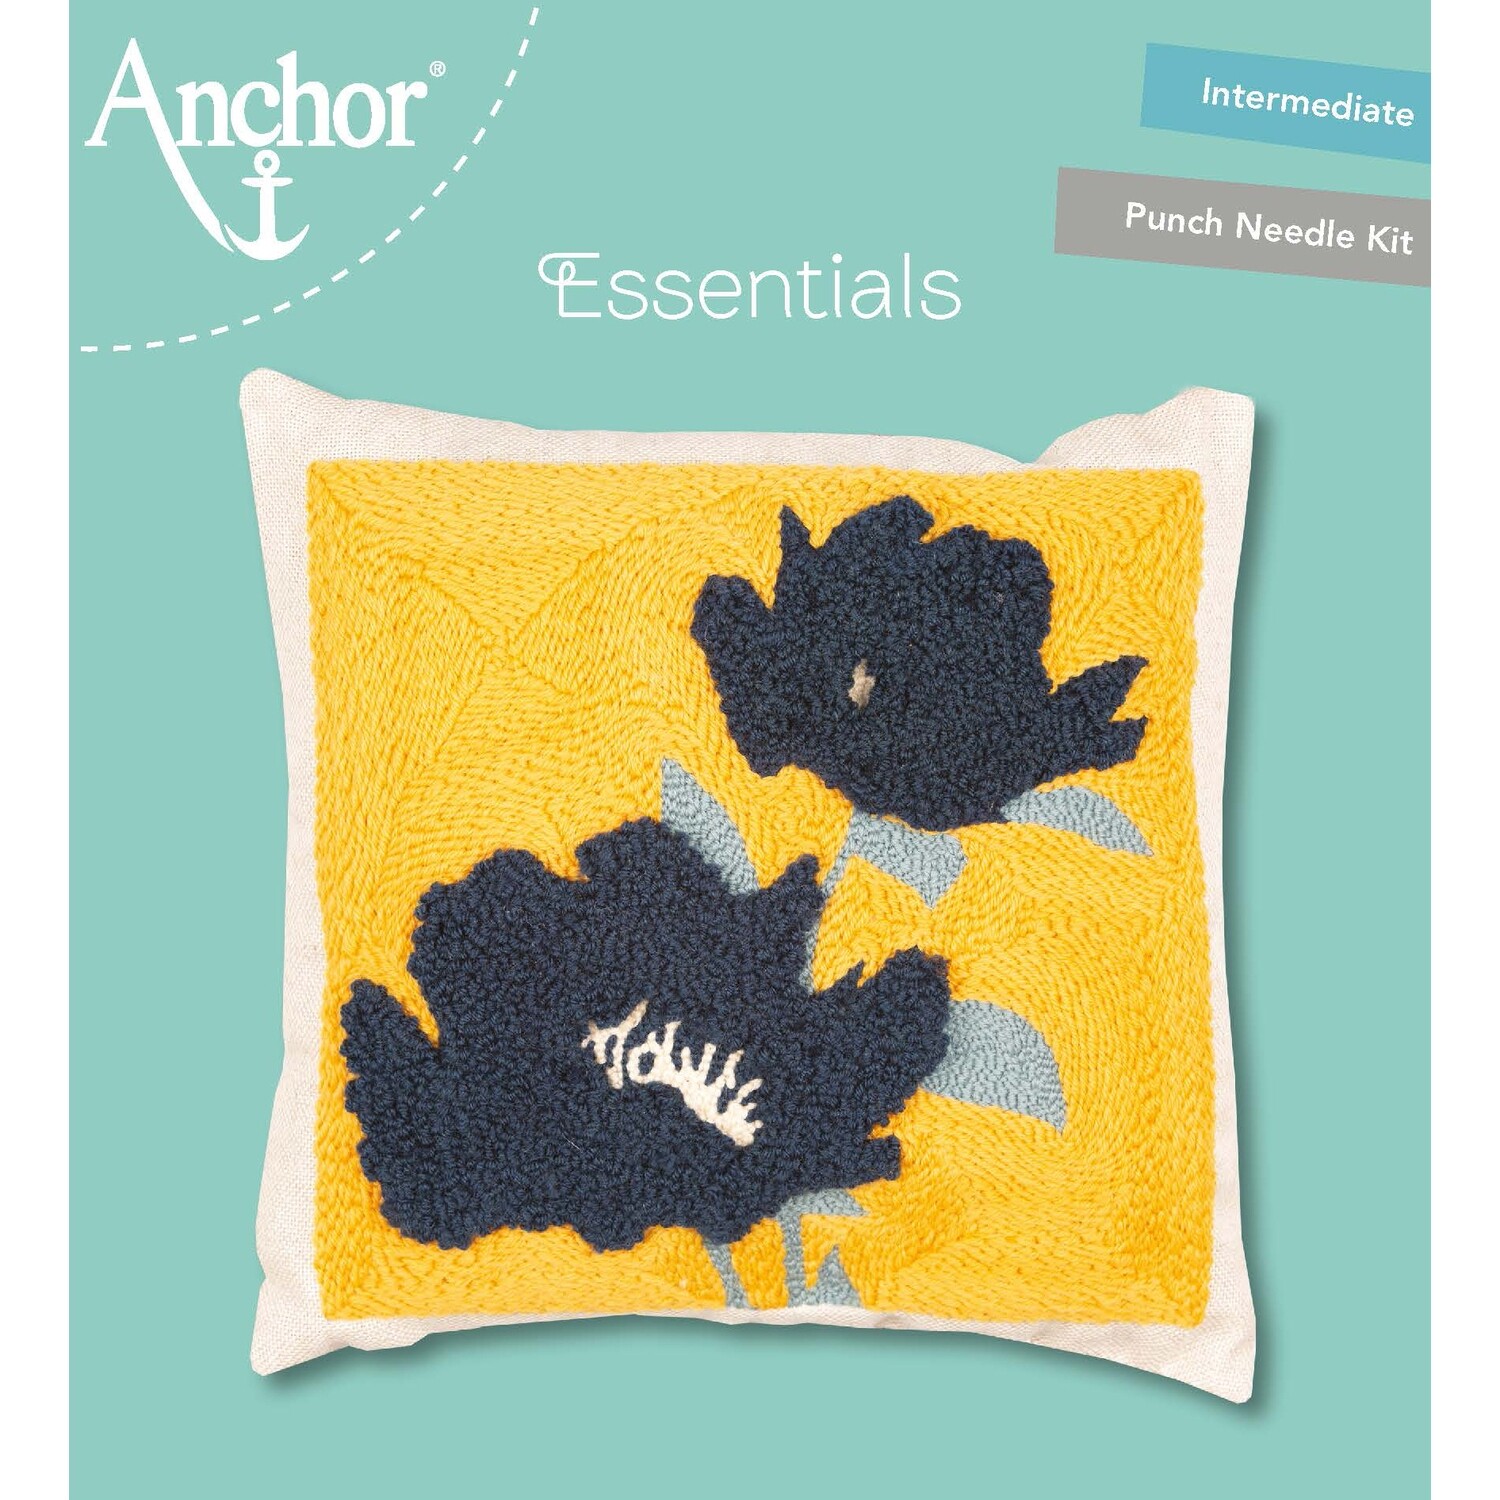 Anchor Essentials Punch Needle Kit - Floral cushion 30 x 30 cm